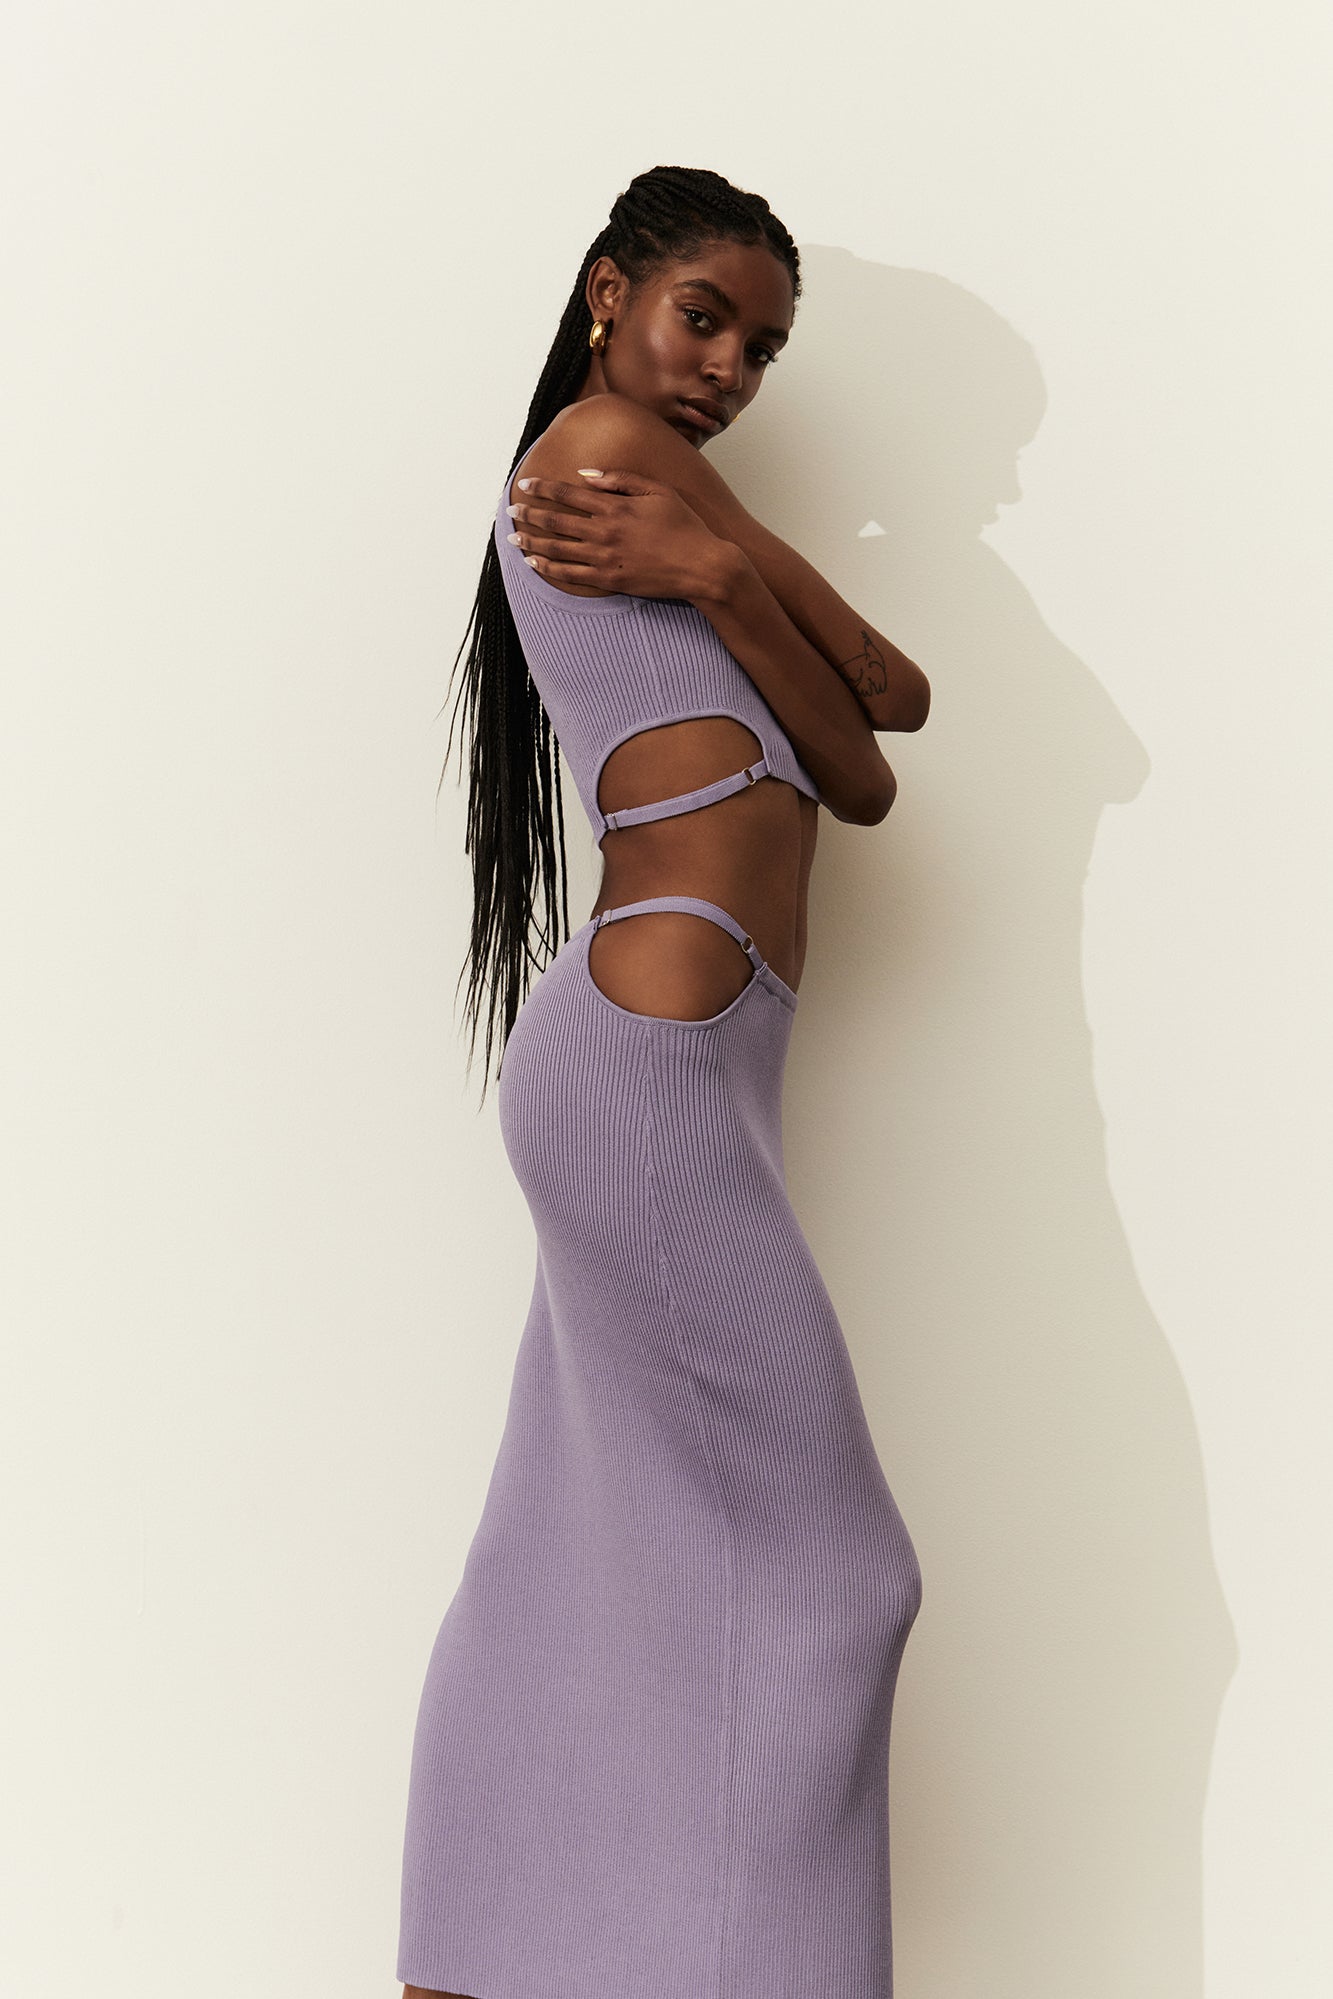 GINIA Selena Knit Skirt in Lavender